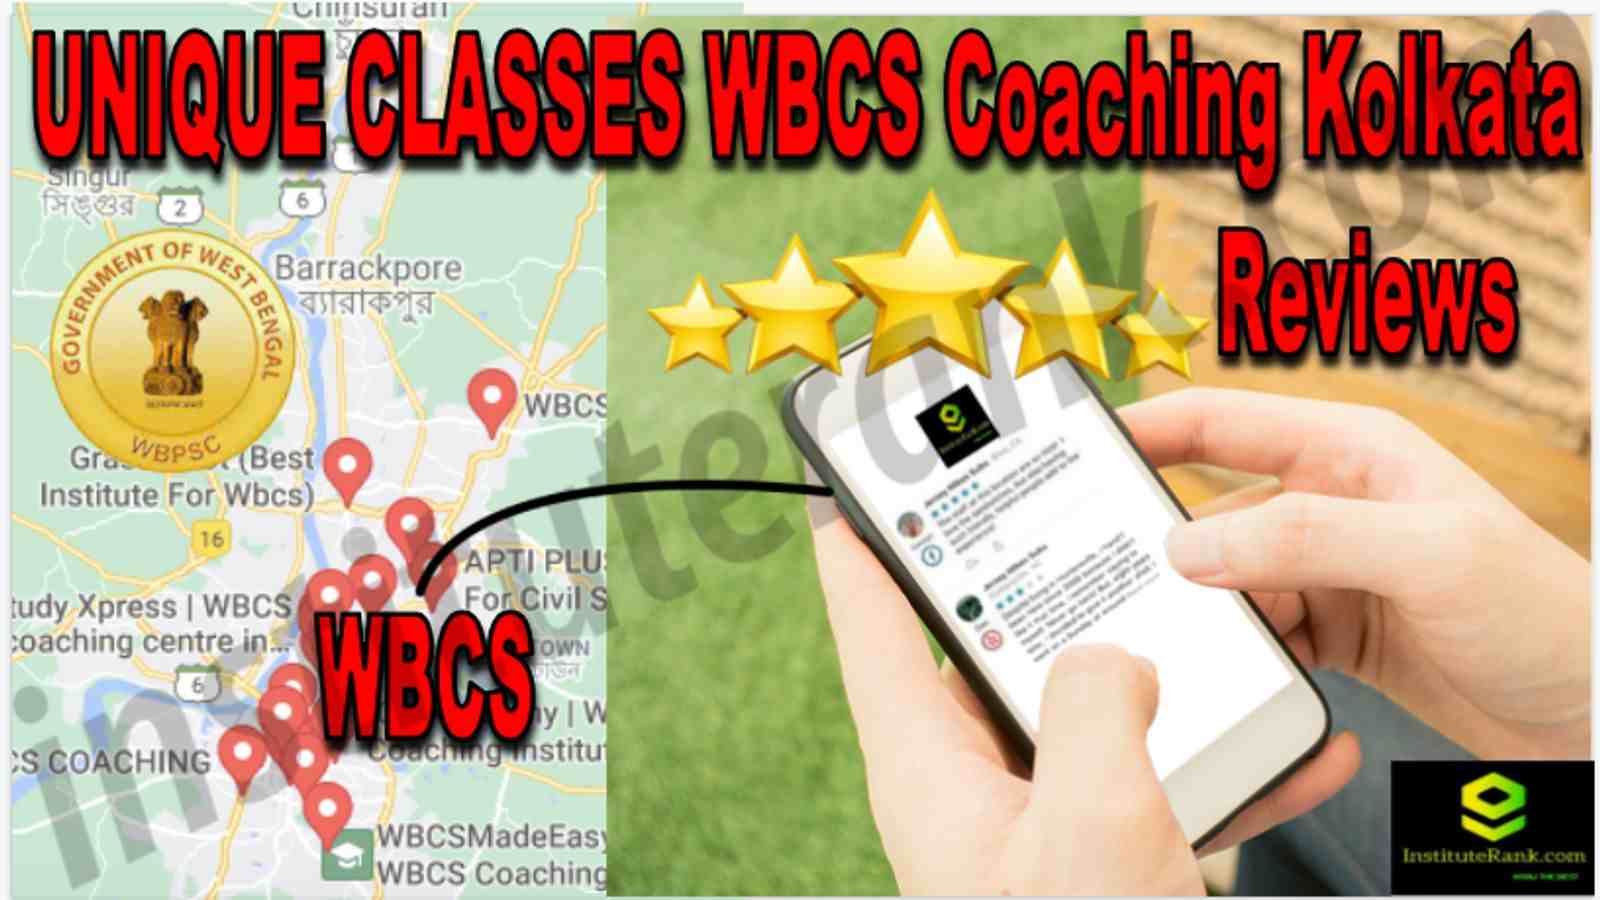 Unique Classes WBSC Coaching Kolkata reviews